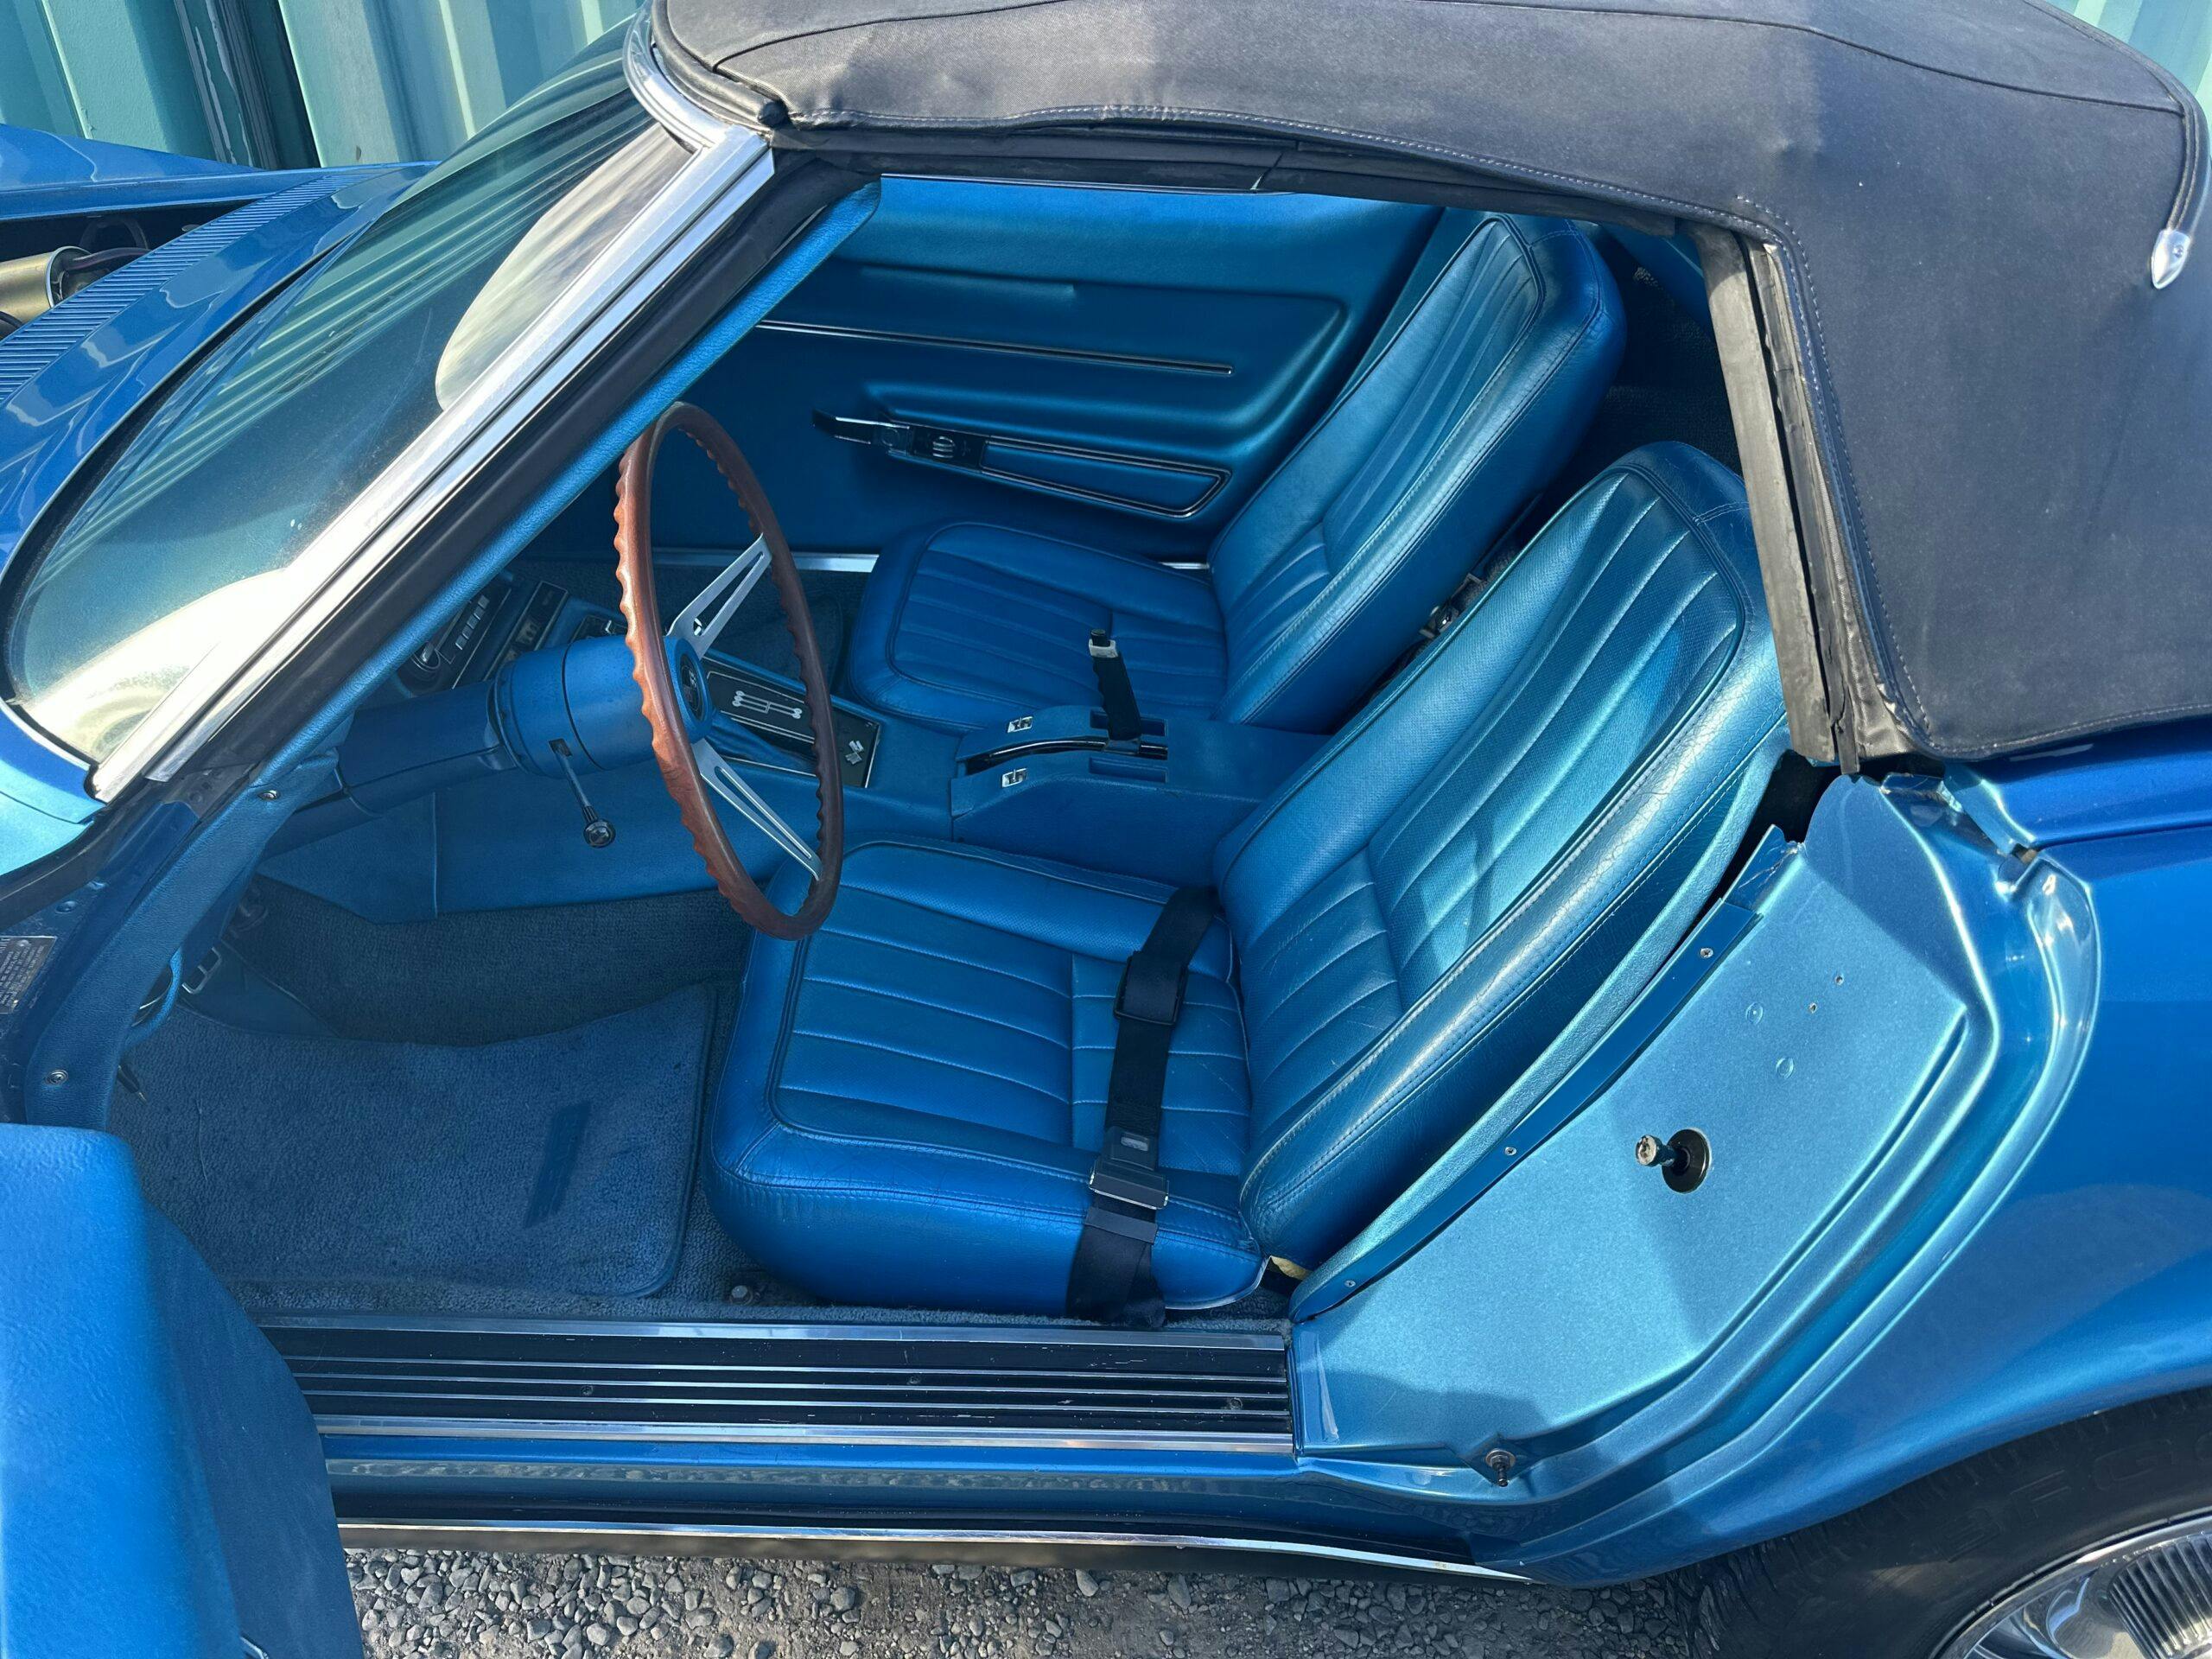 1968 Corvette C2 Stingray interior side